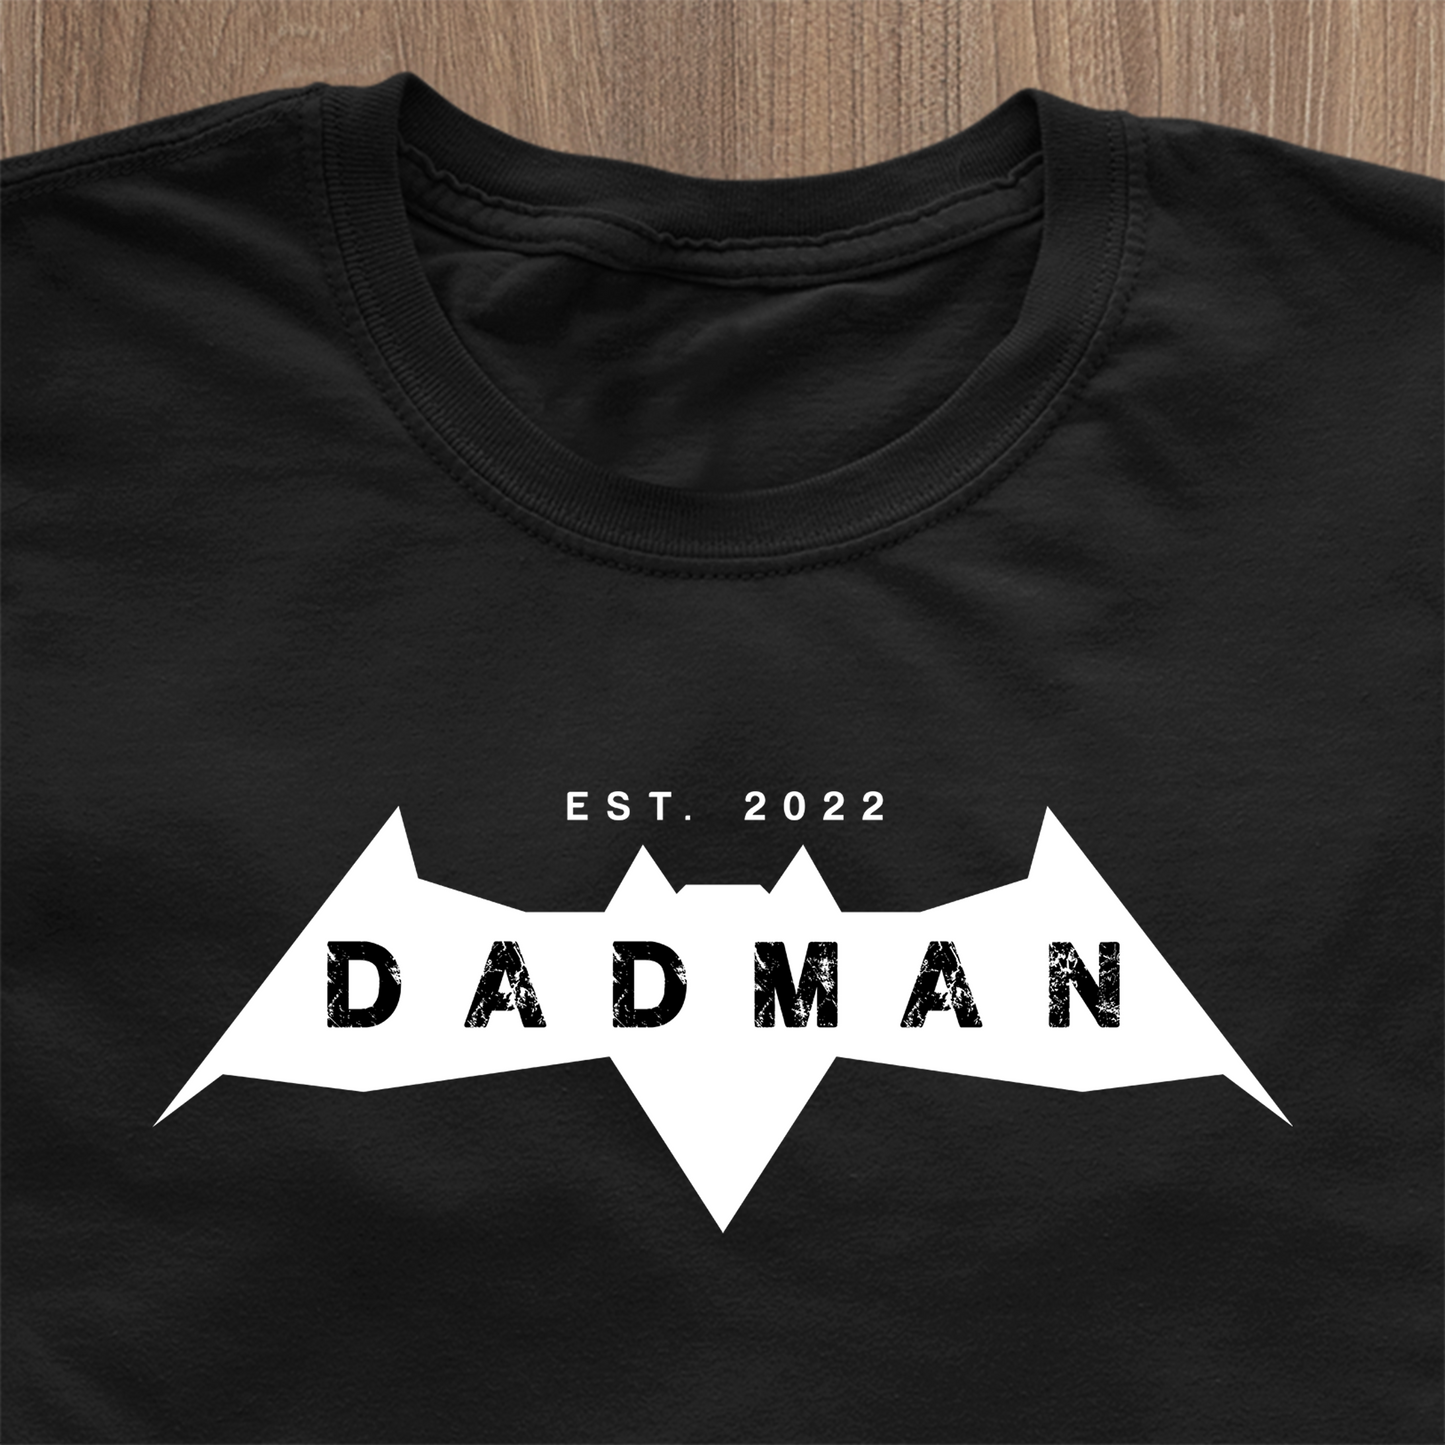 Camiseta Dadman - Fecha Personalizada